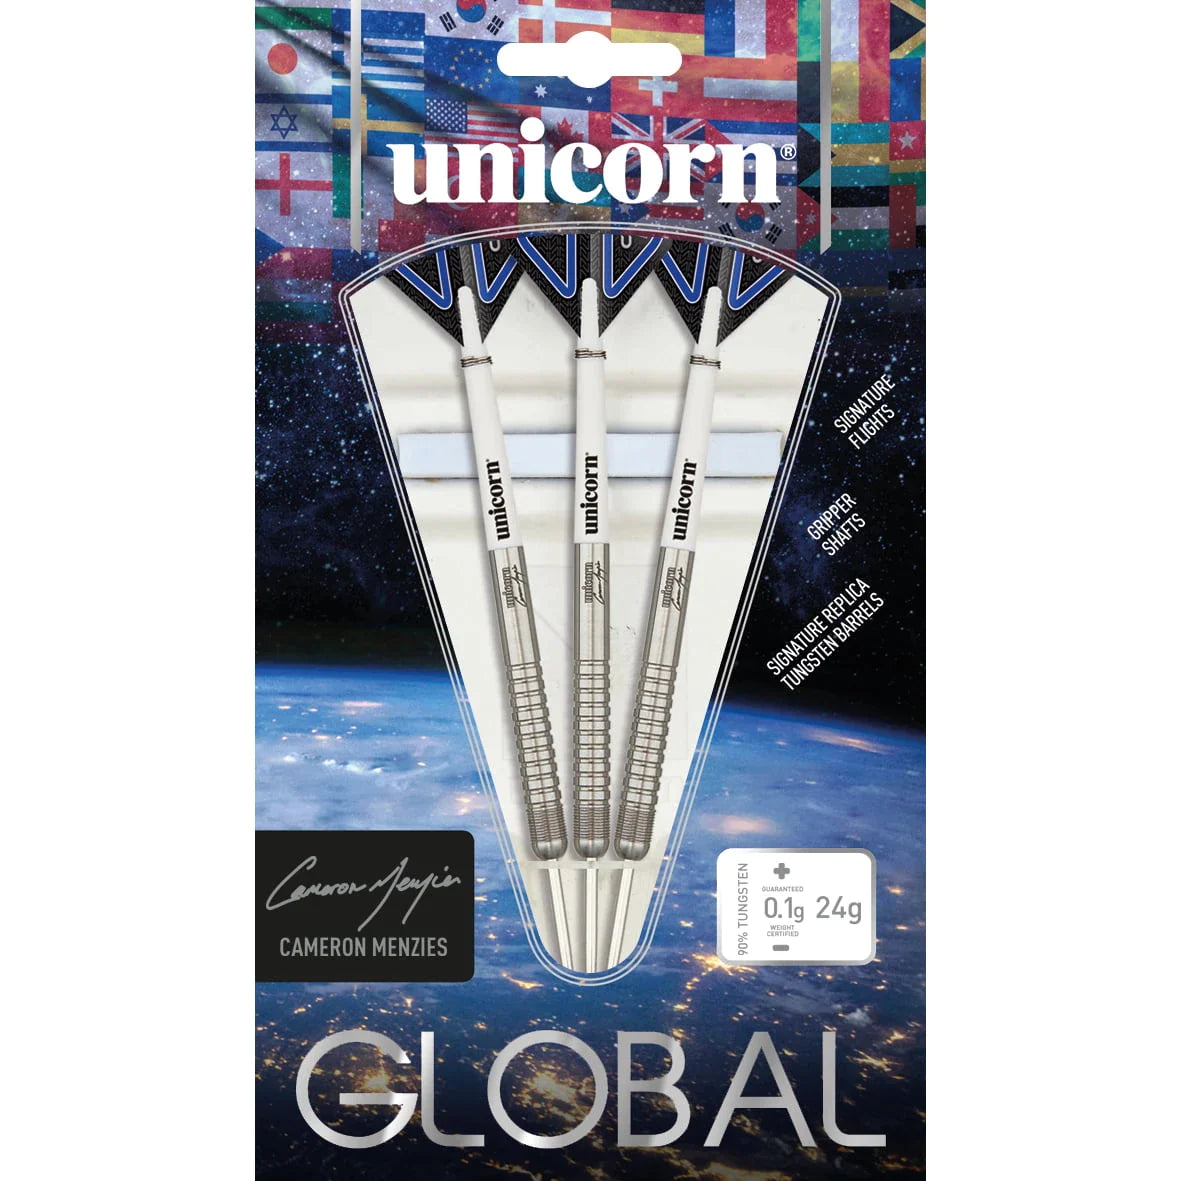 Unicorn Cameron Menzies Global 24g Darts